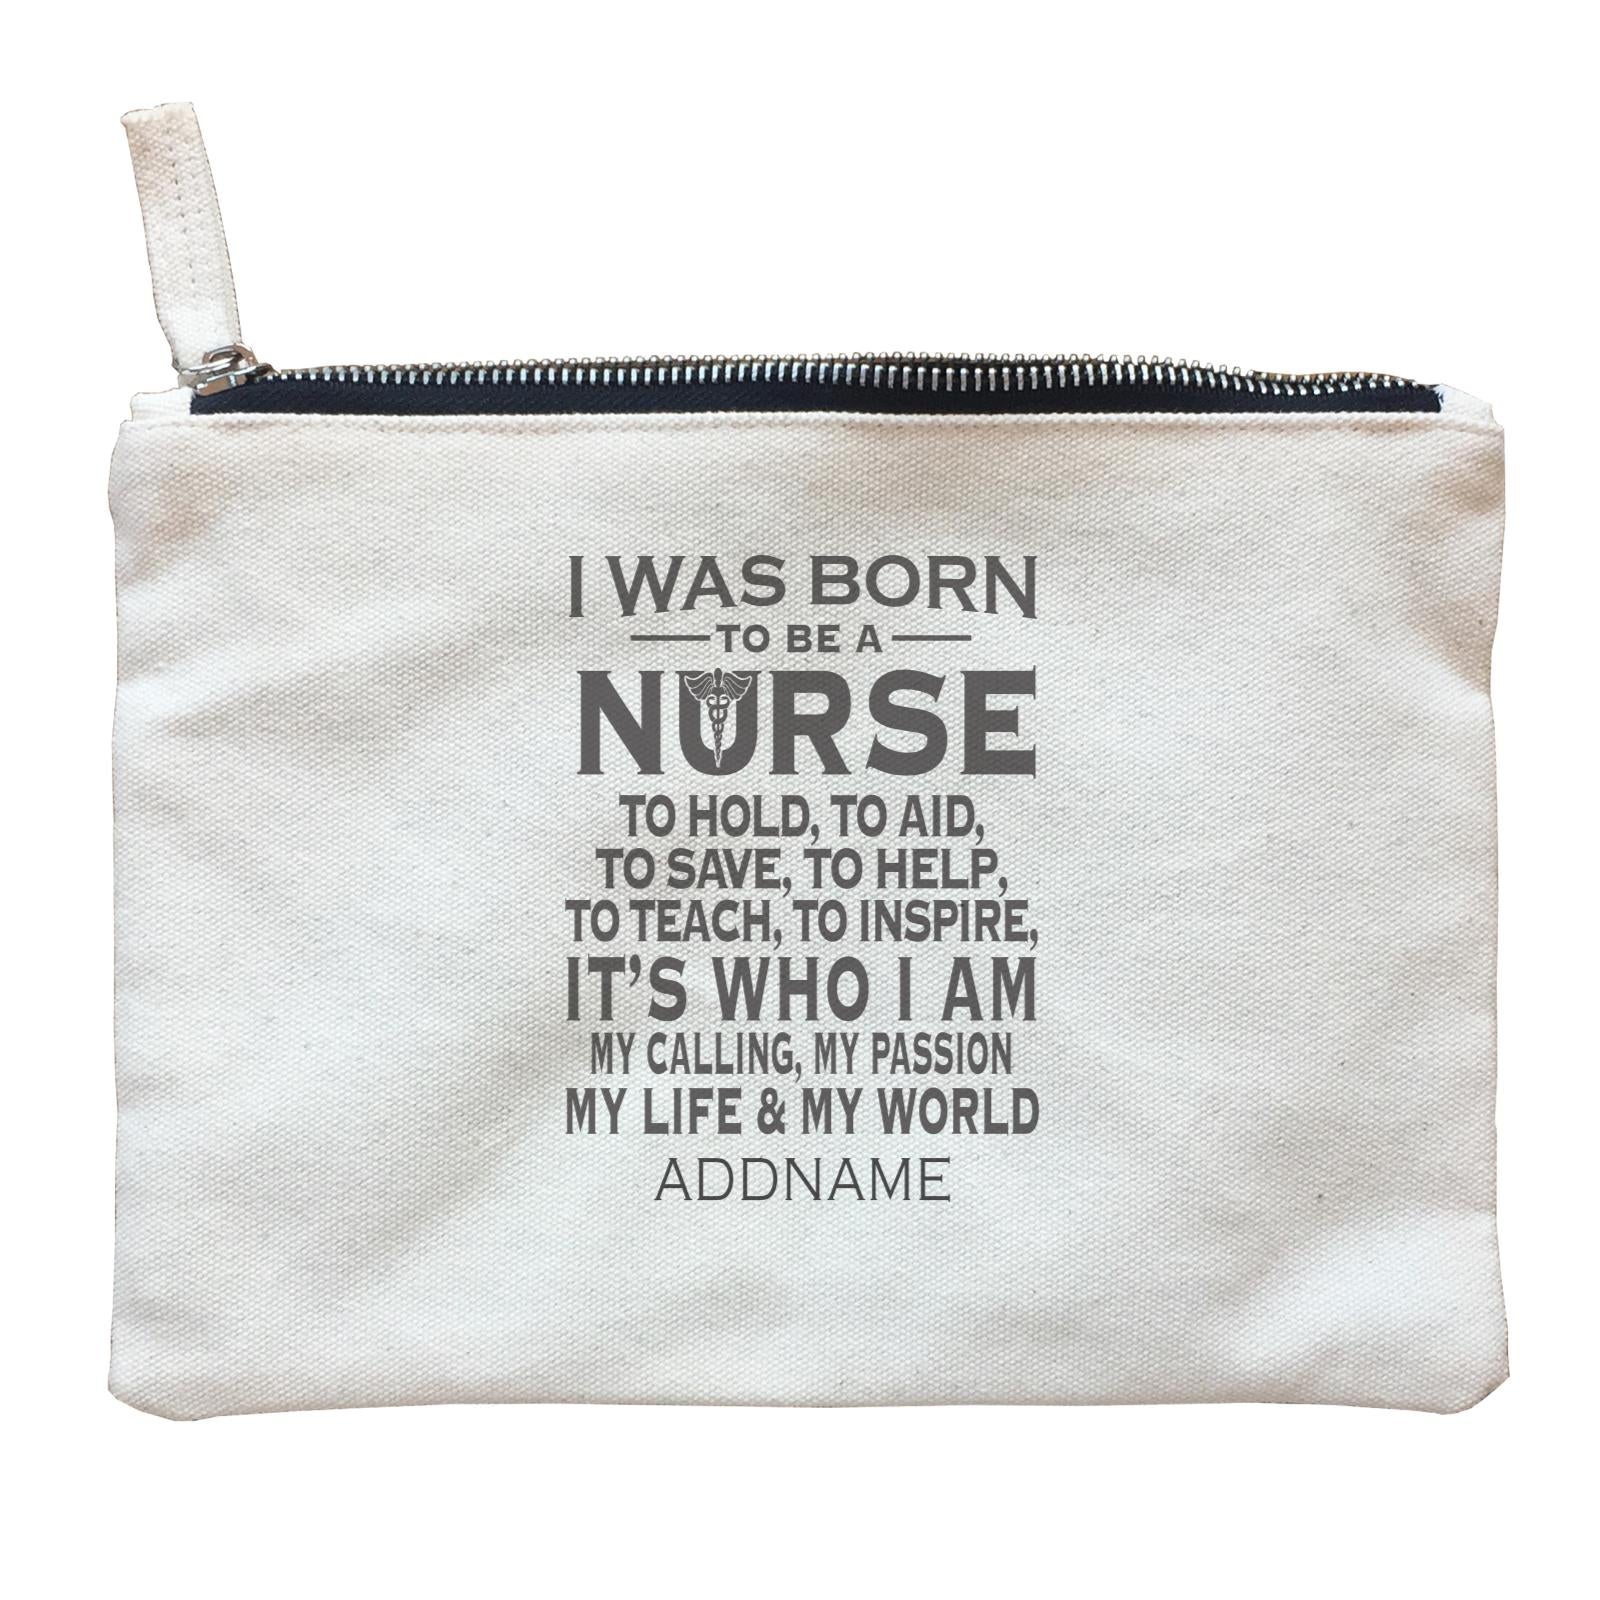 Nurse QuotesI Was Born To Be A Nurse Addname Zipper Pouch